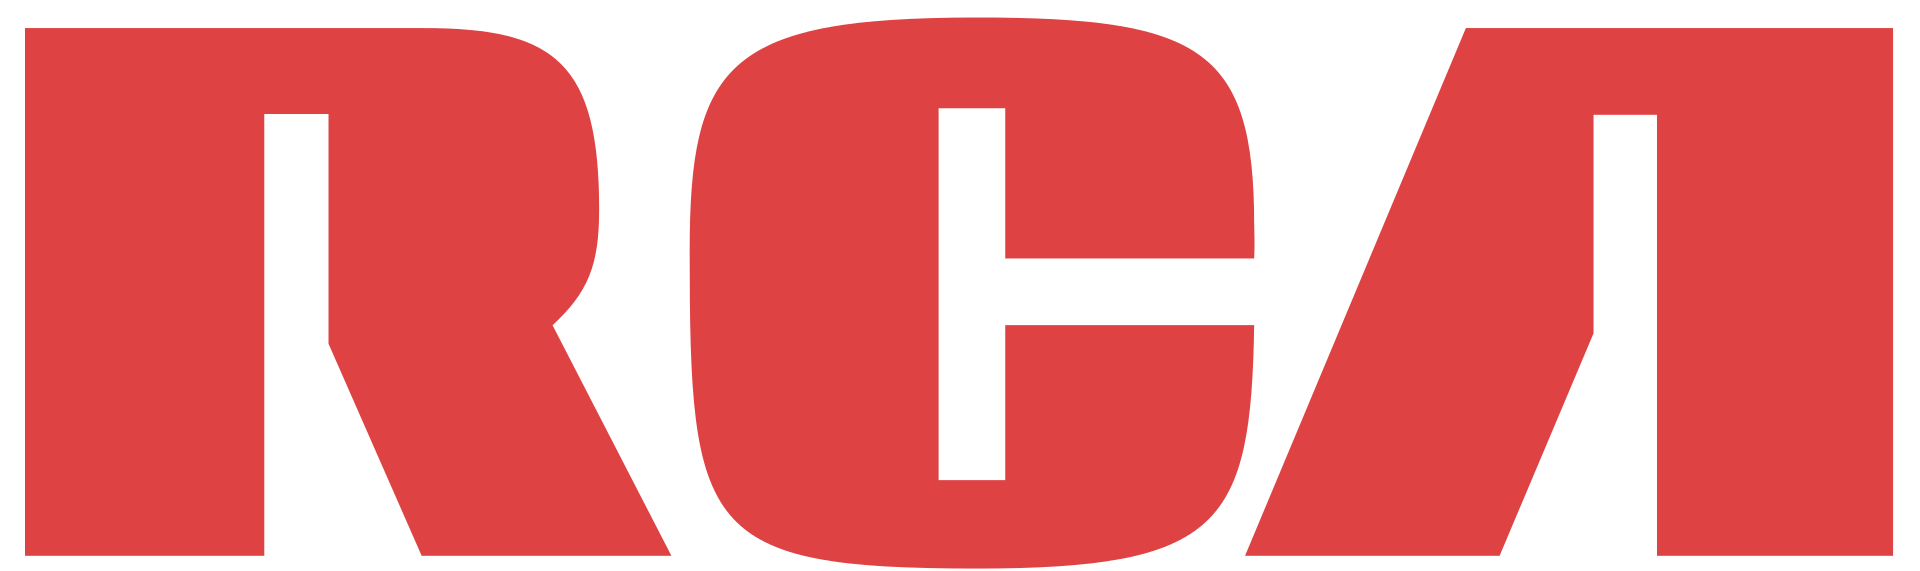 het originele RCA-logo. Afbeelding via Wikipedia .